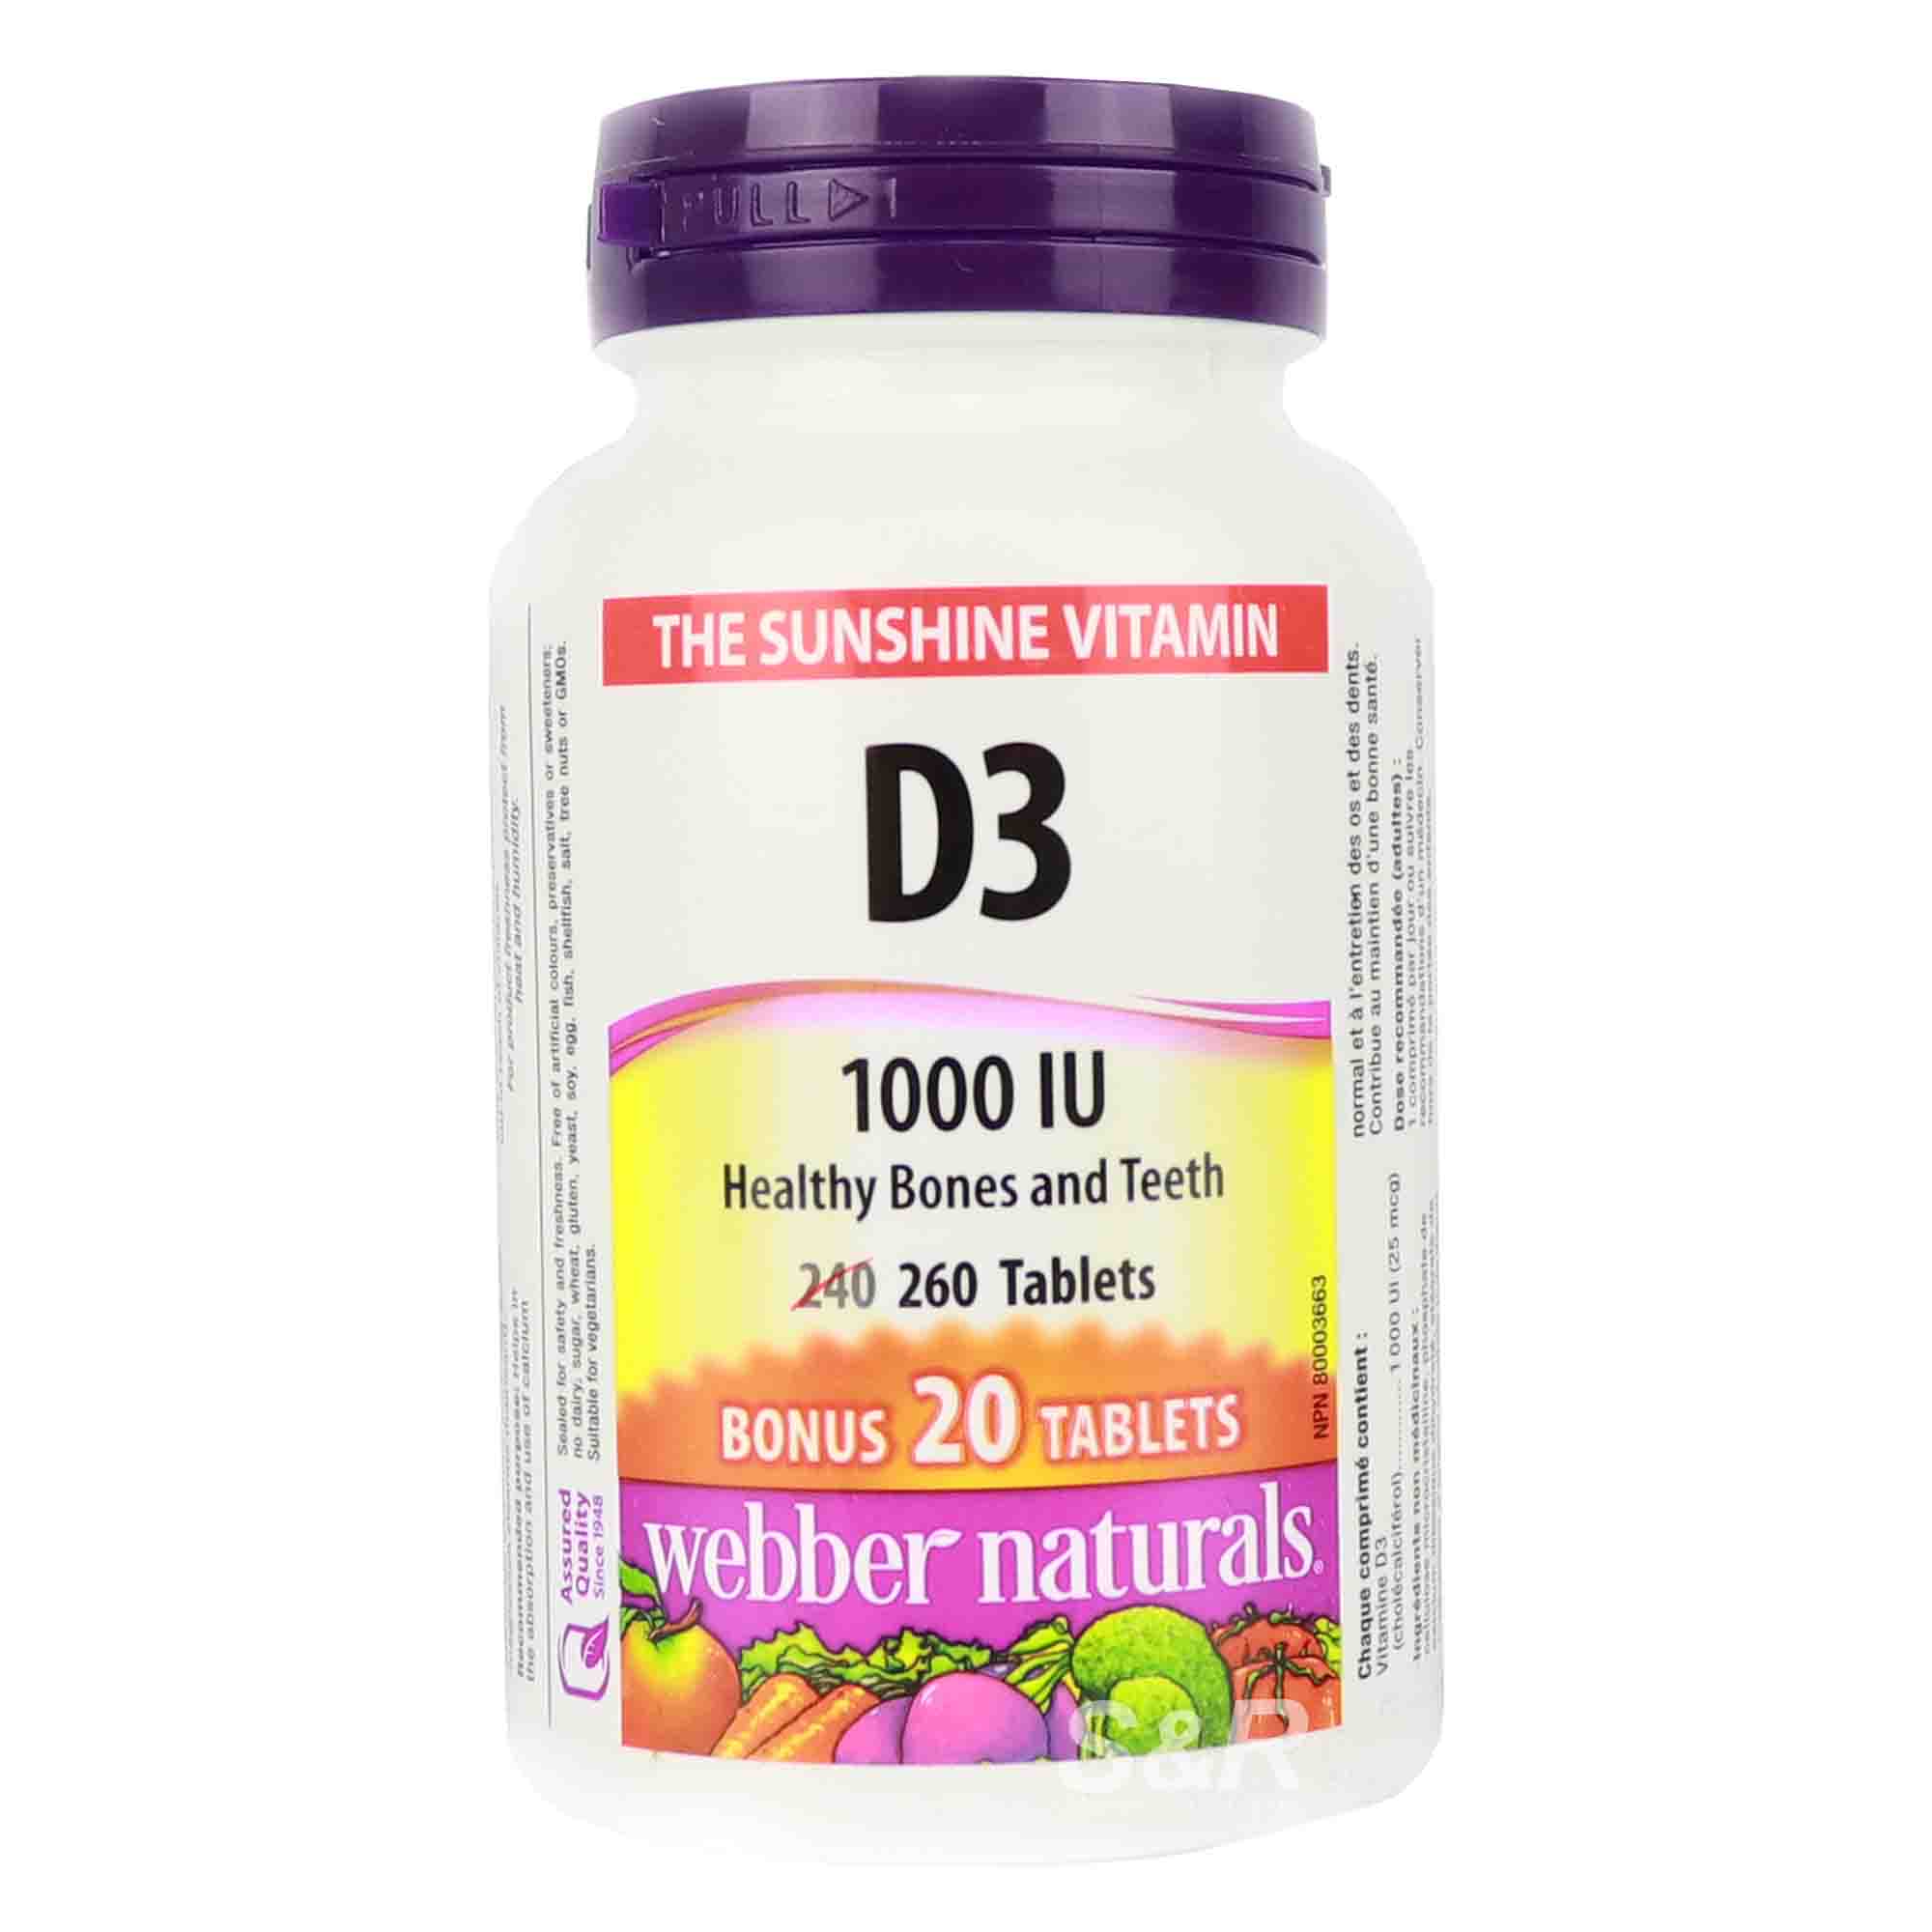 Webber Naturals The Sunshine Vitamin D3 1000 IU 260 tablets